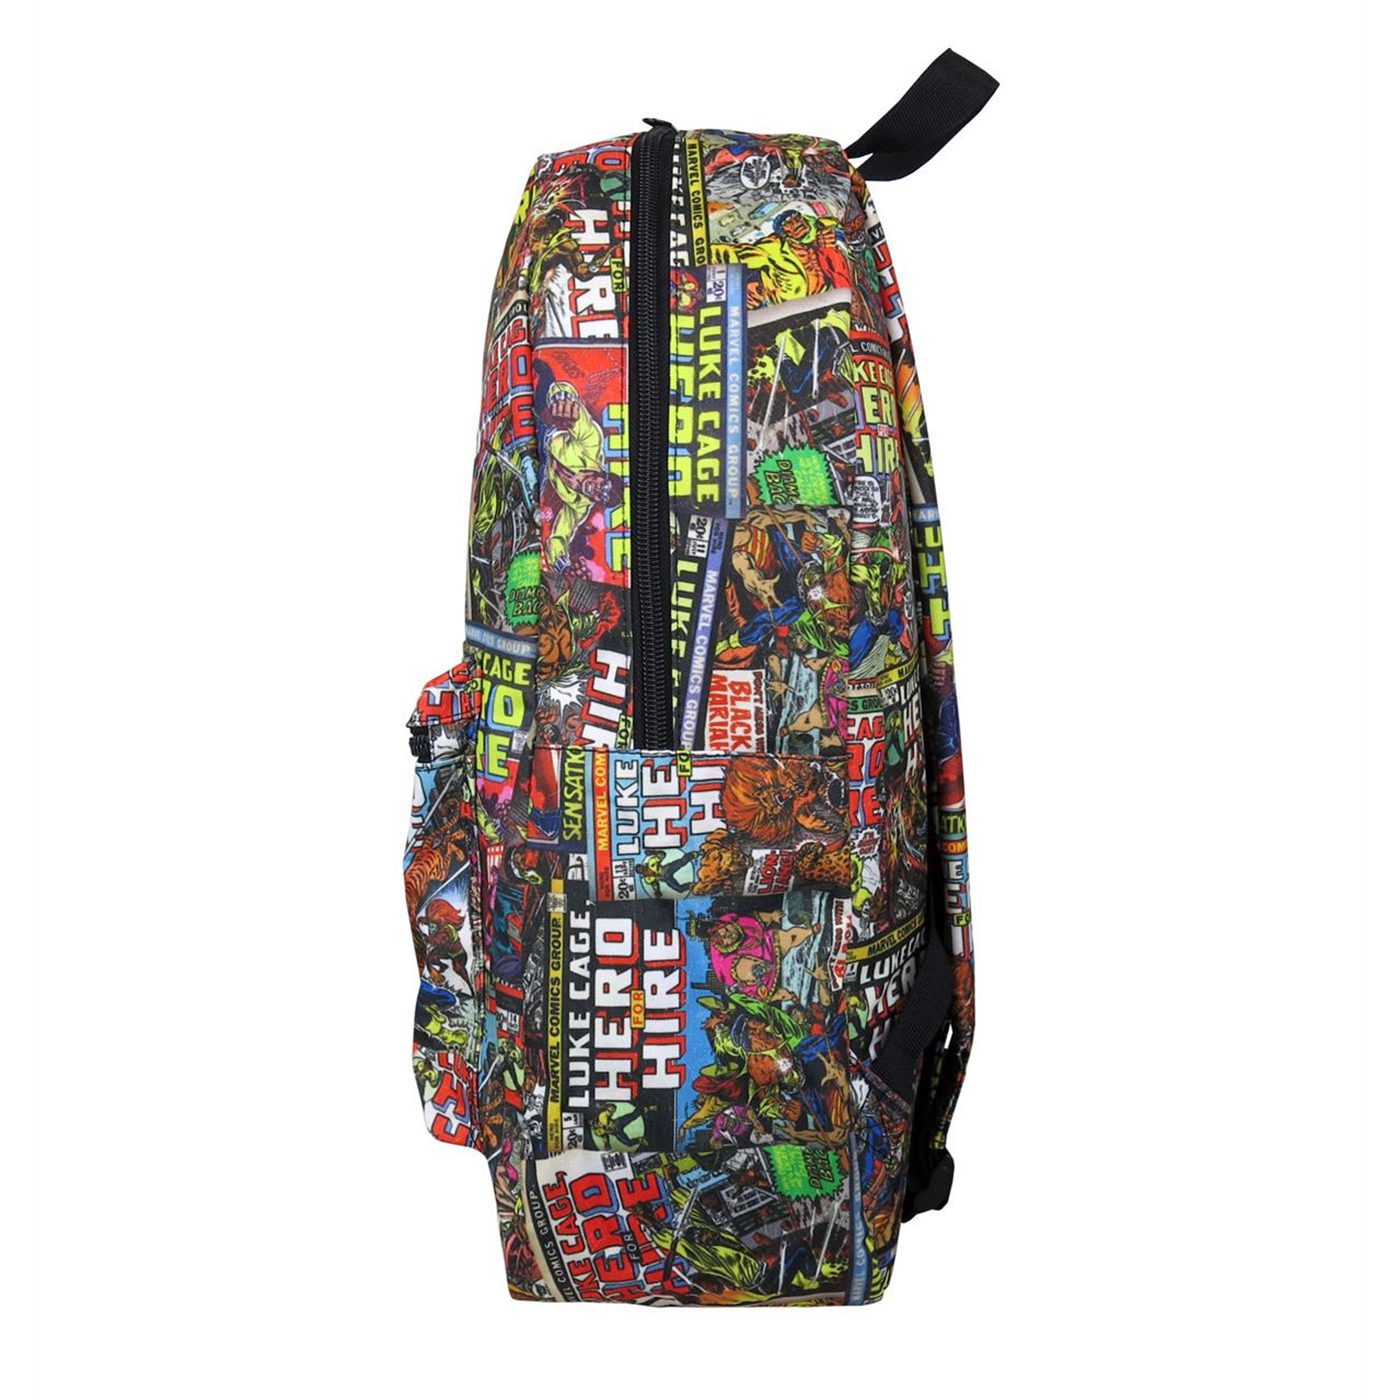 Luke Cage Comic Cover Mosaic Backpack